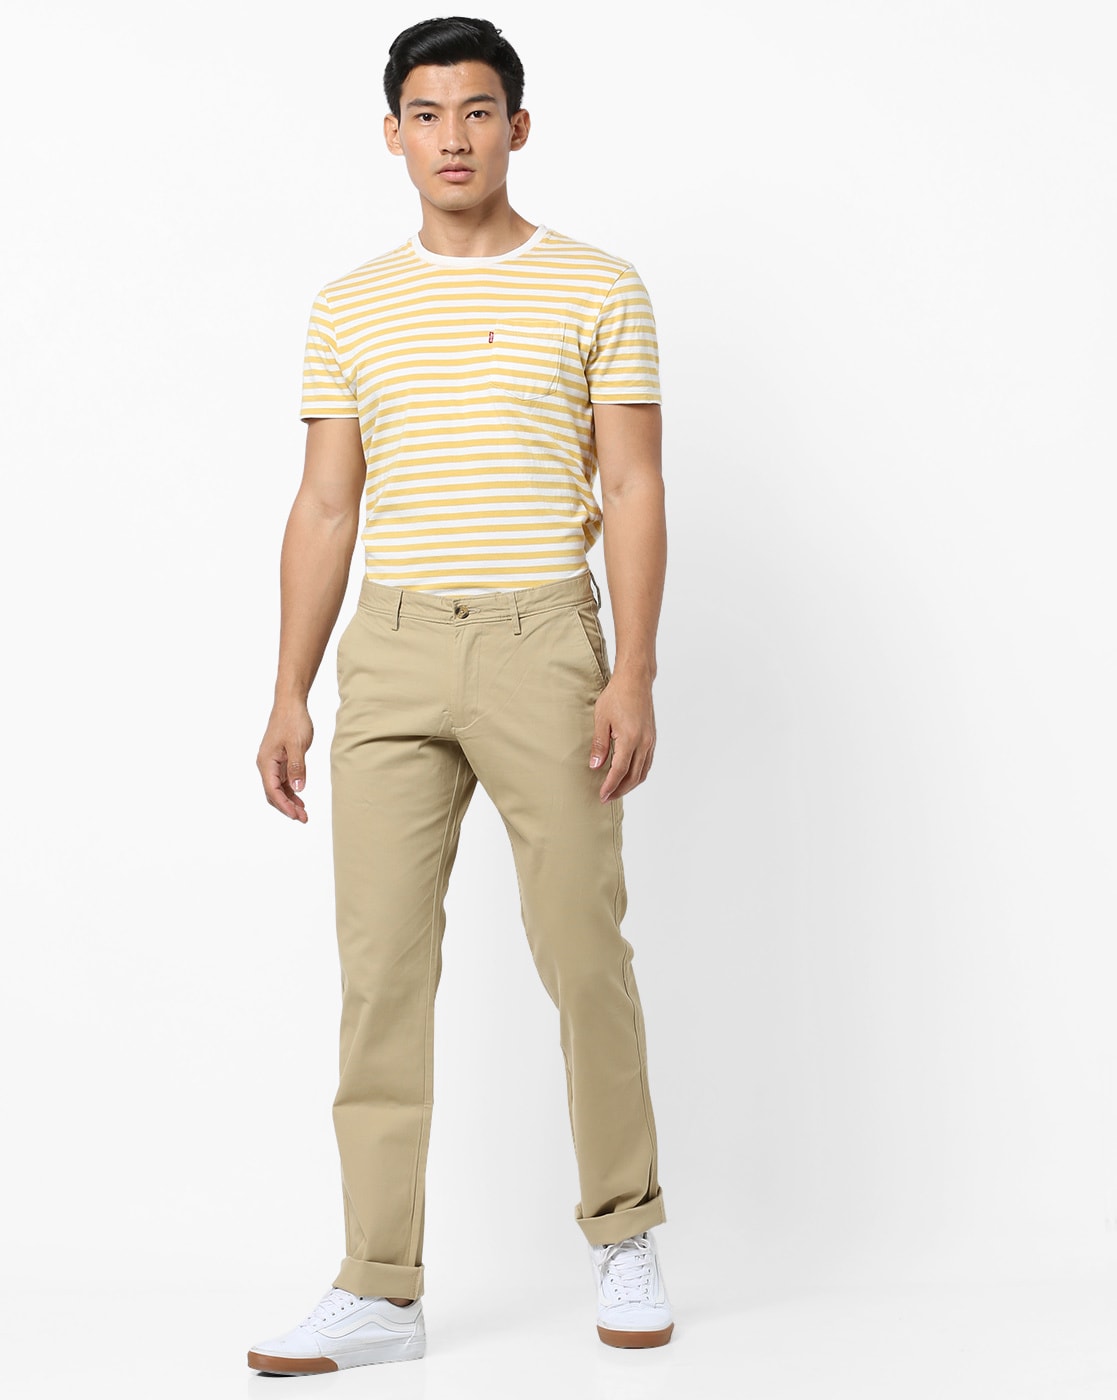 Buy Khaki Trousers  Pants for Men by LEE COOPER Online  Ajiocom